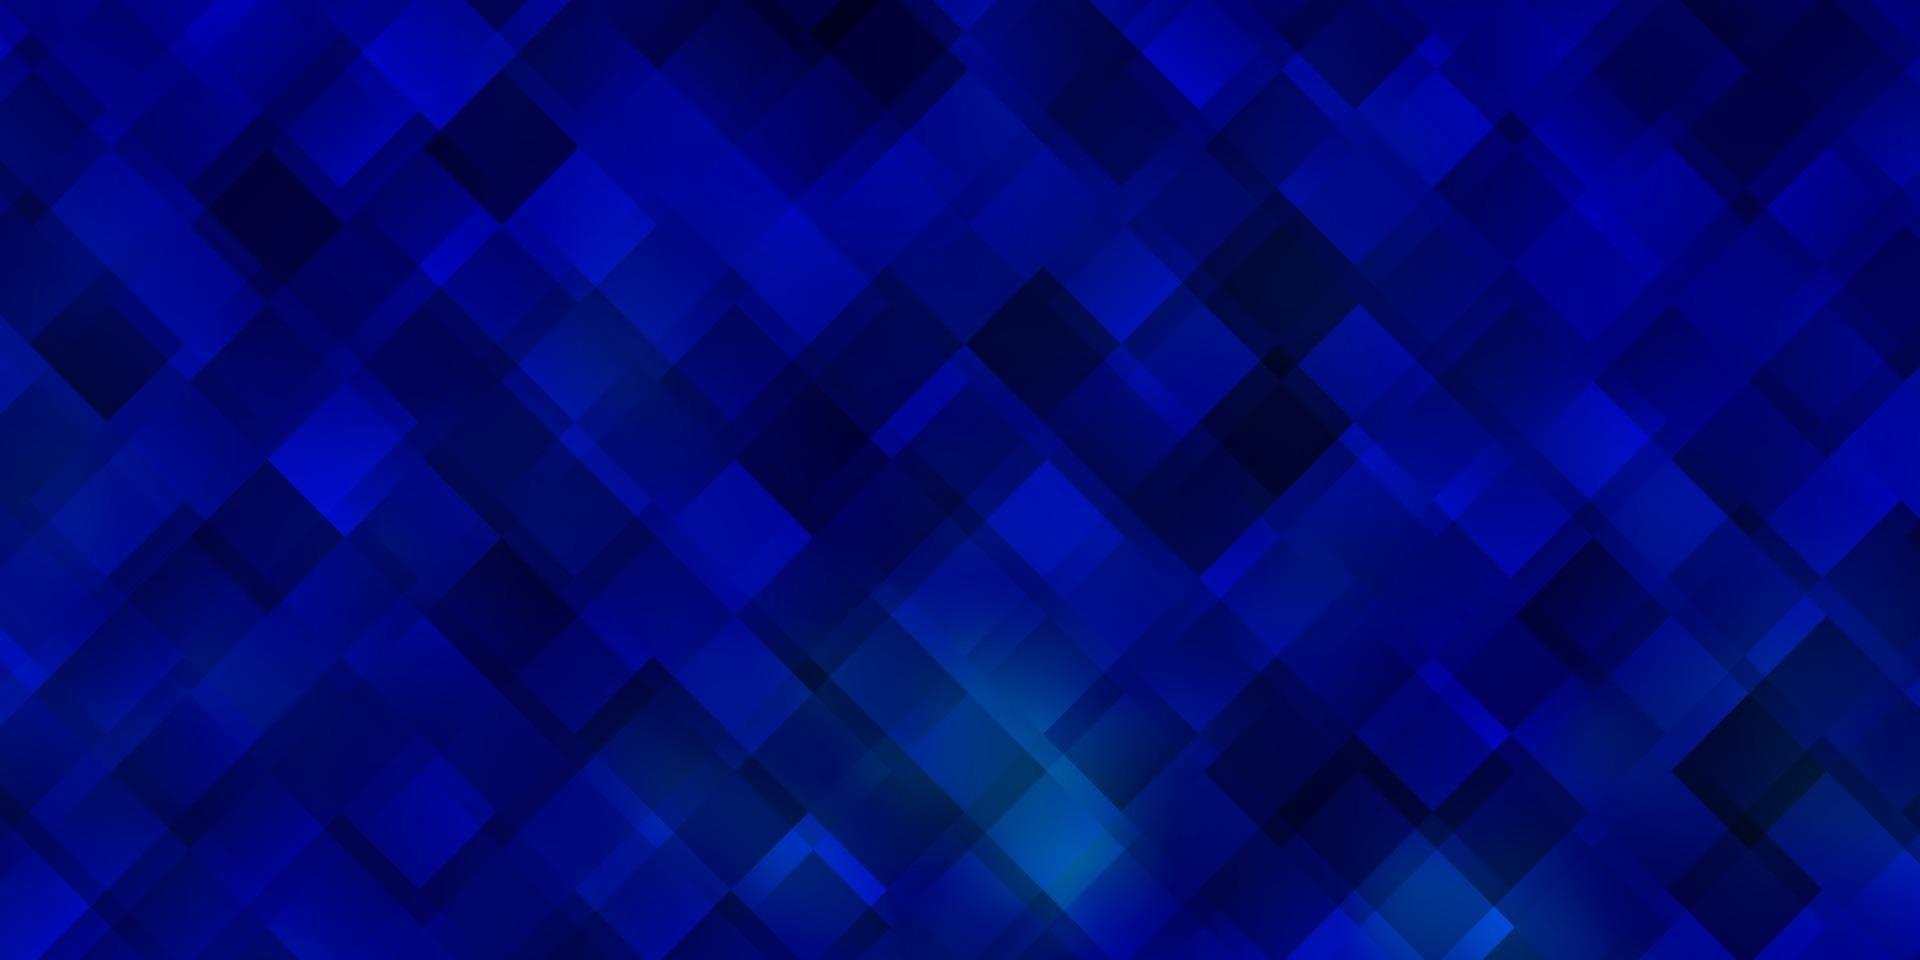 Fondo de vector azul oscuro con rectángulos.